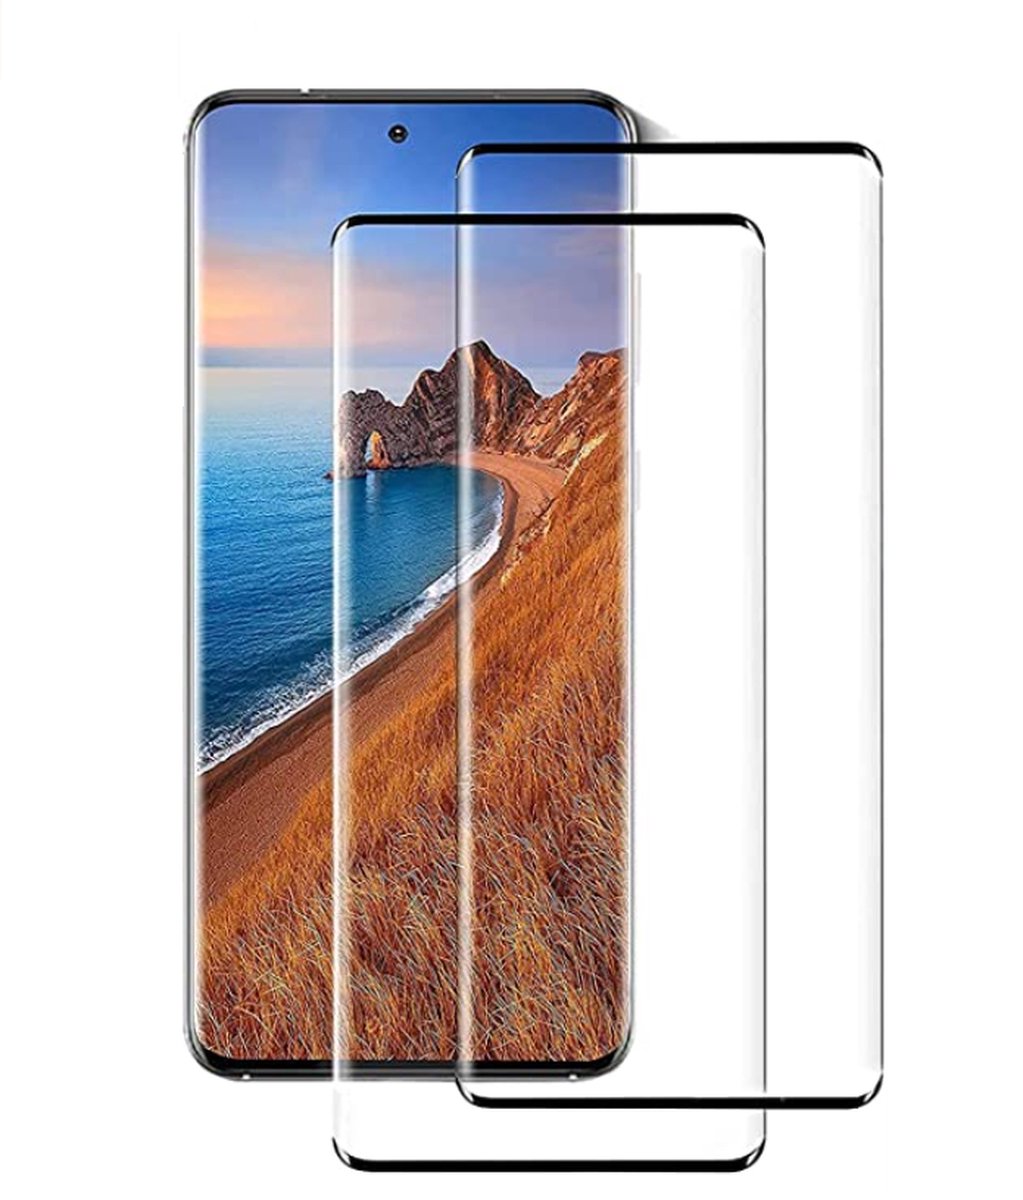 screenprotector Samsung Galaxy S21 FE screenprotector 2 packs - tempered glass - beschermlaag voor Galaxy S21 FE Samsung